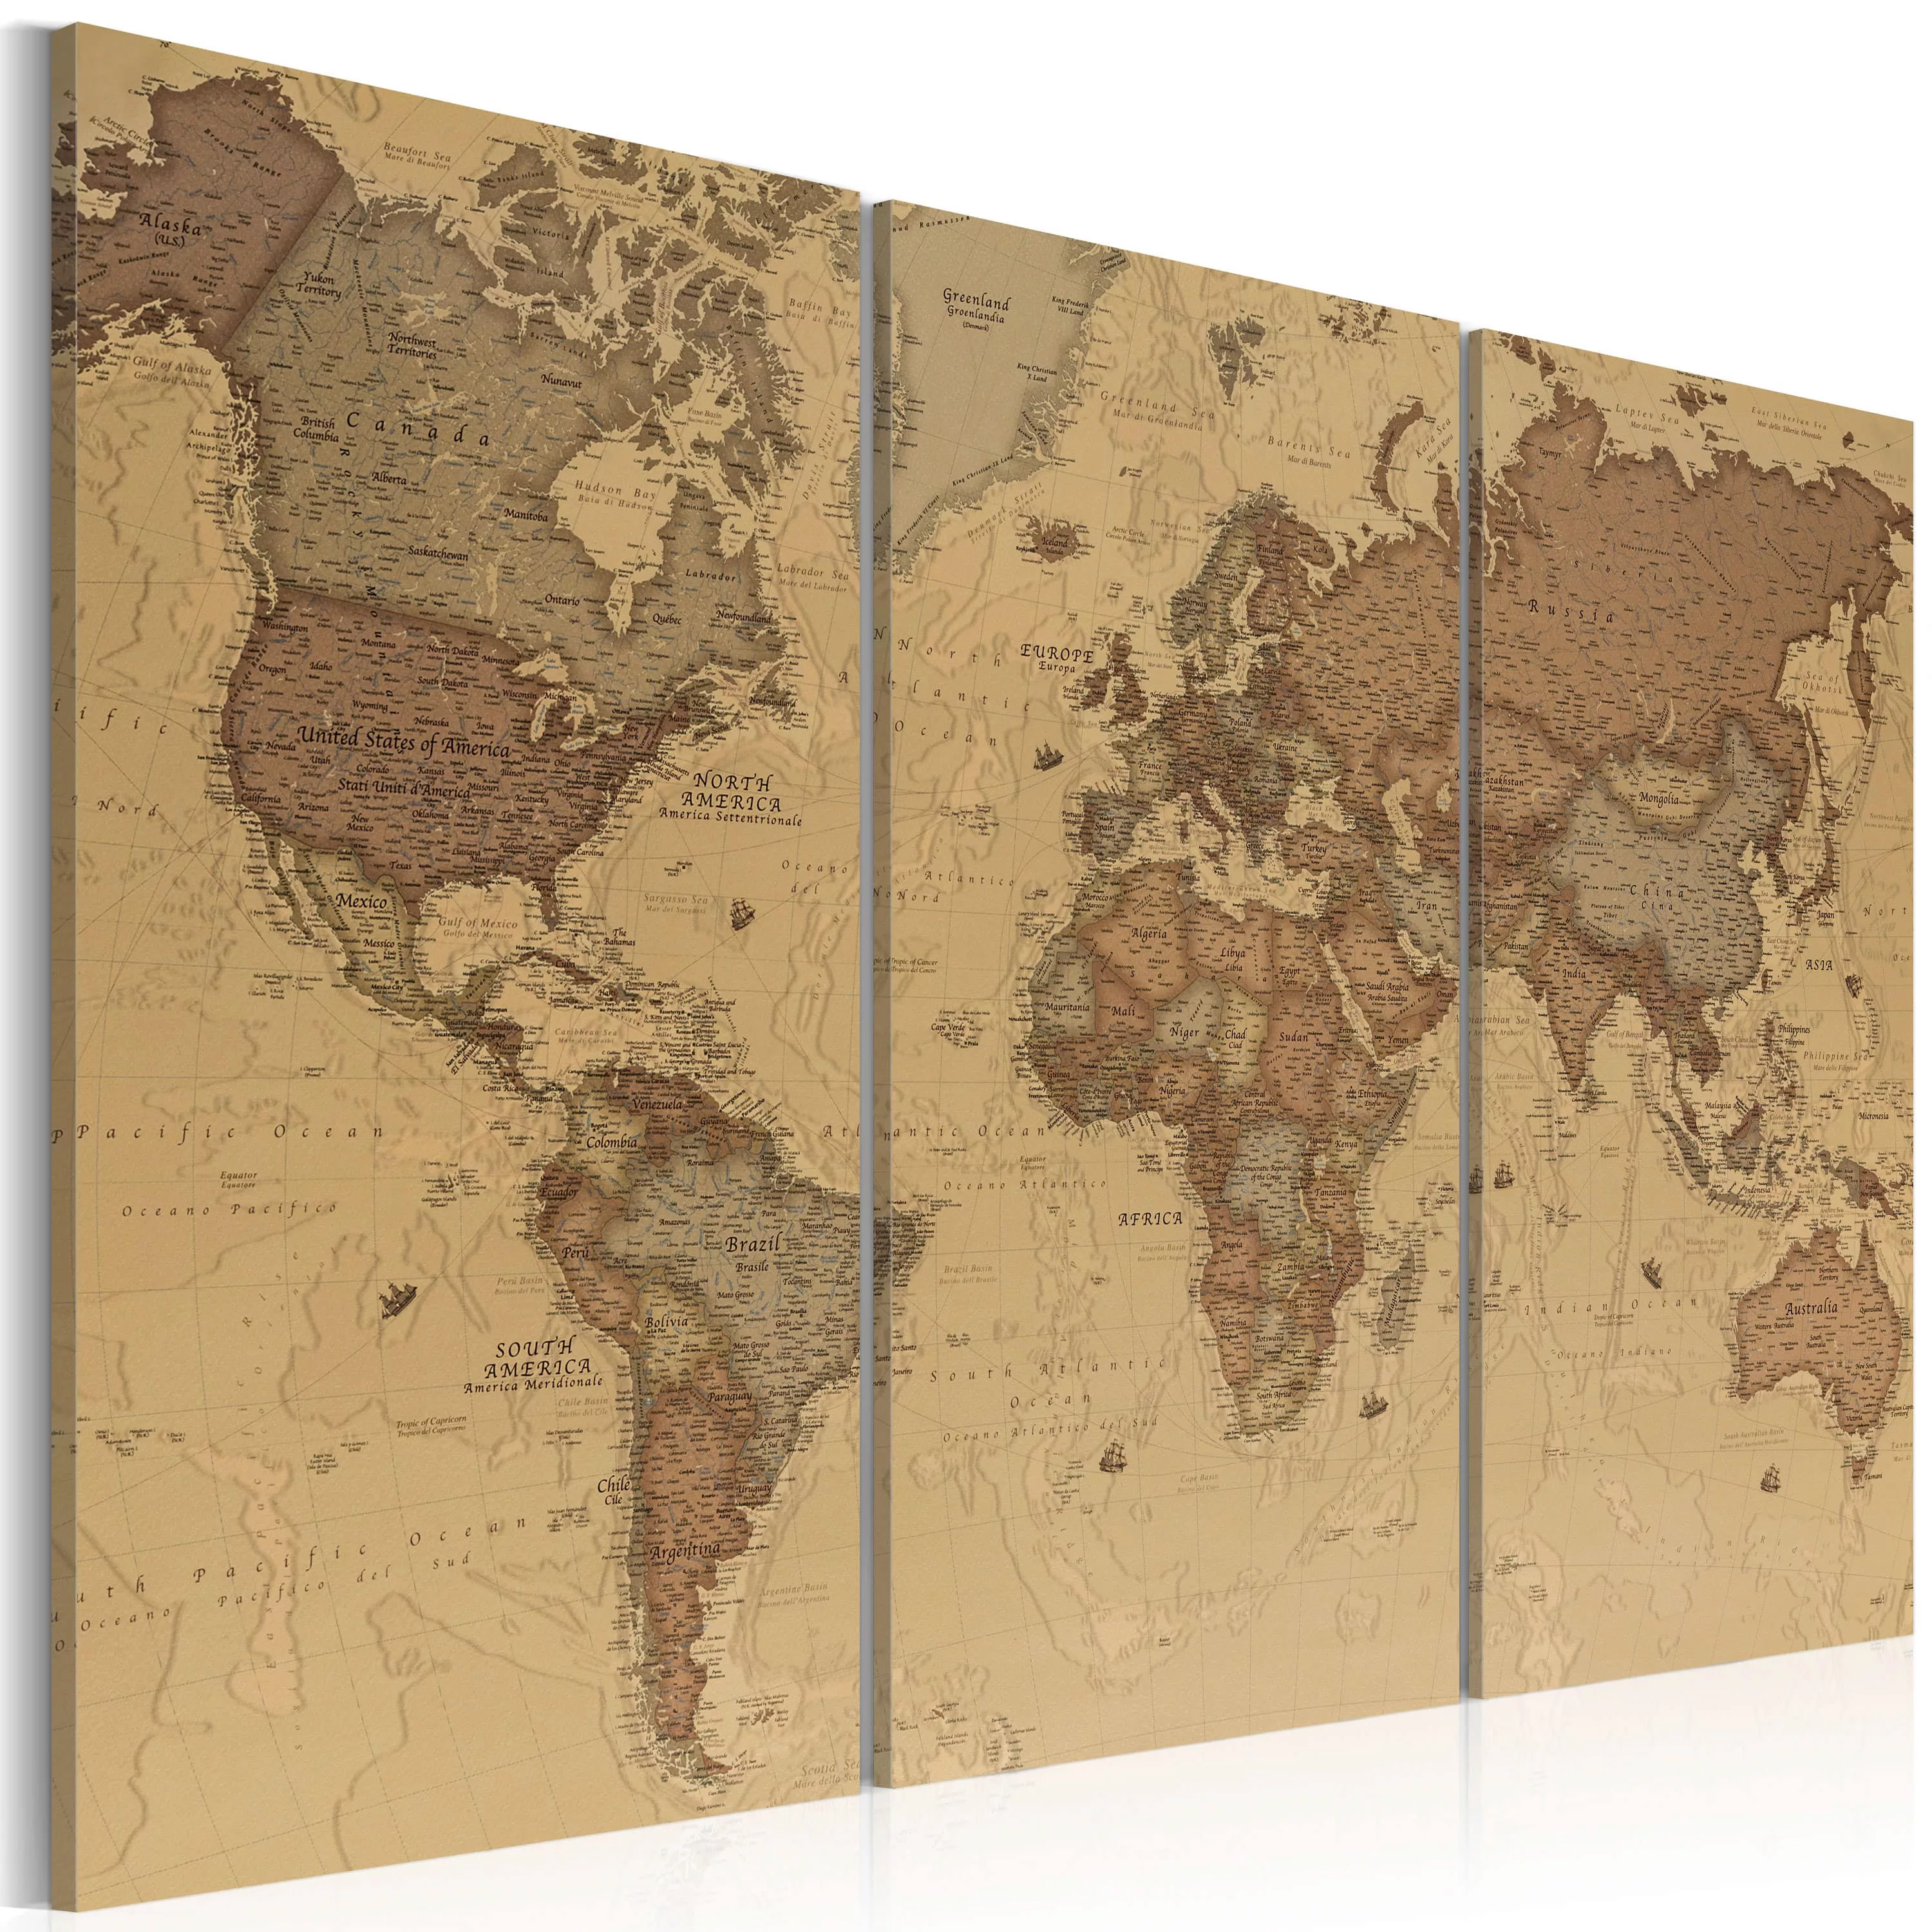 Wandbild - Stylish World Map günstig online kaufen